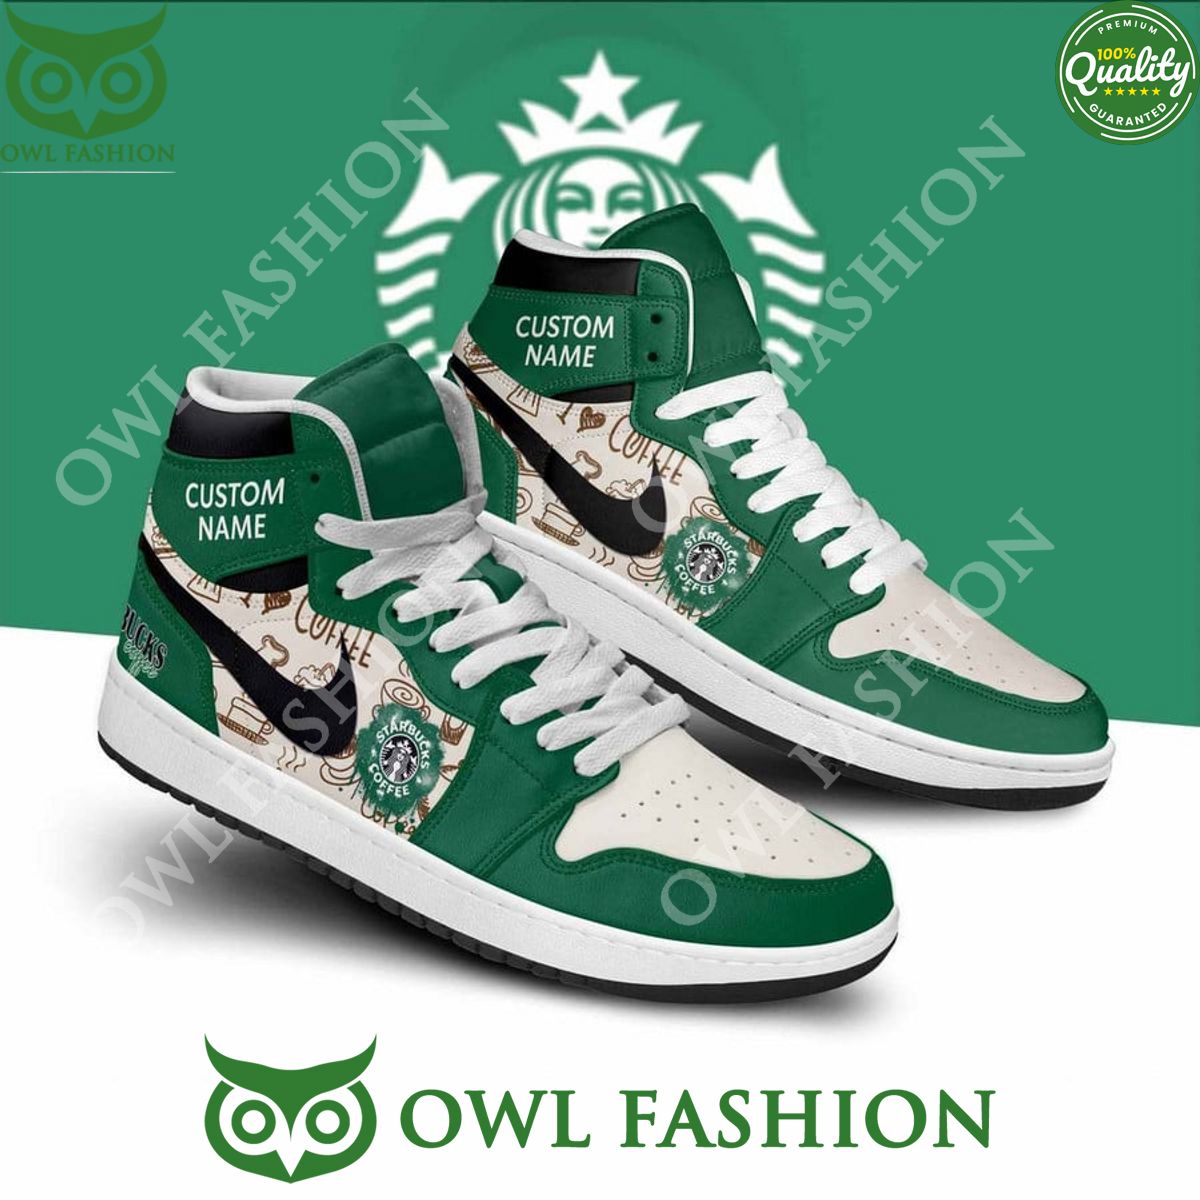 Starbucks Coffee Custom Name Air Jordan High Top shoes Best picture ever